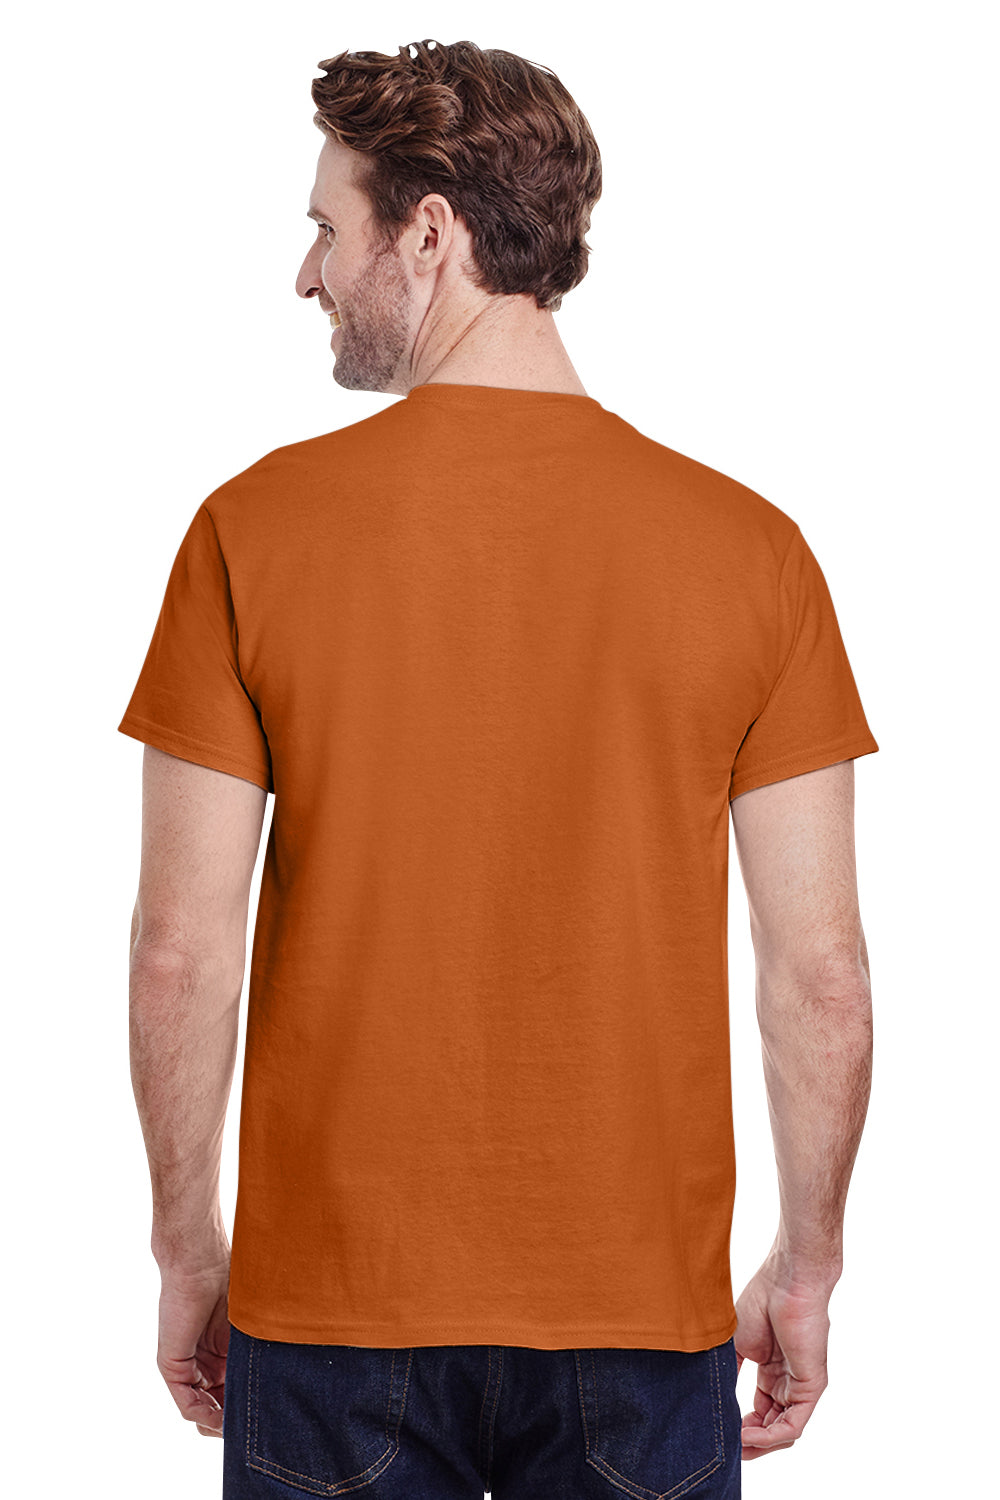 texas orange t shirt